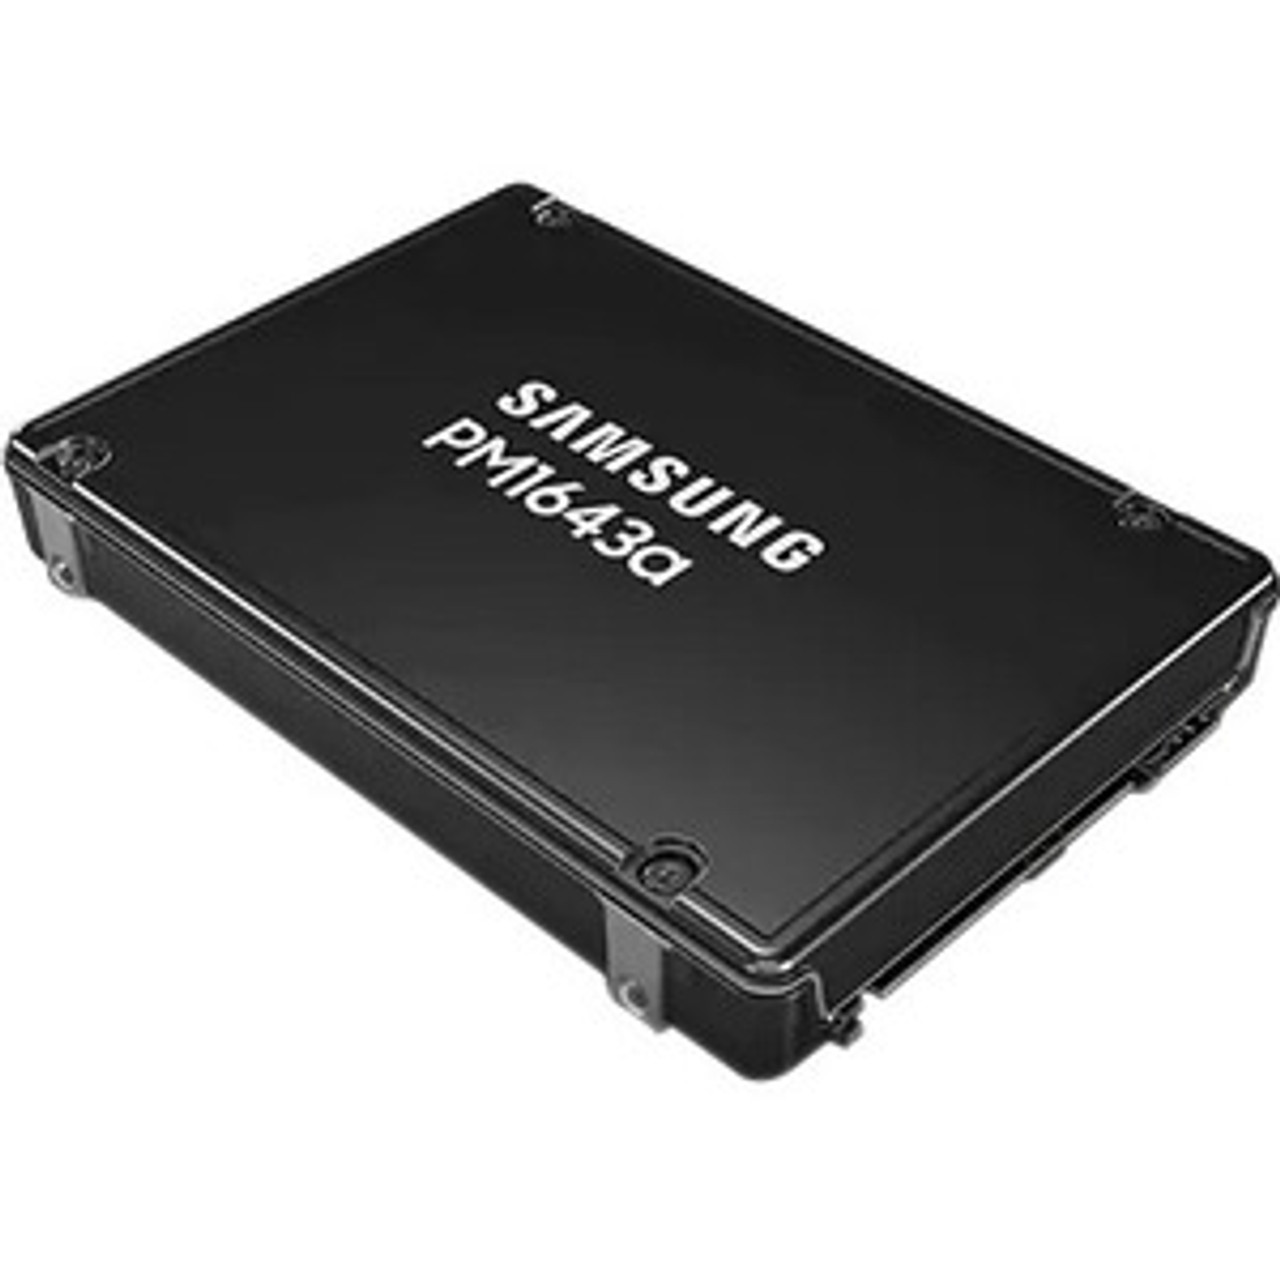 MZILT7T6HALA-00007 Samsung PM1643a 7.68TB SAS 12Gbps 2.5-inch Internal Solid State Drive (SSD)